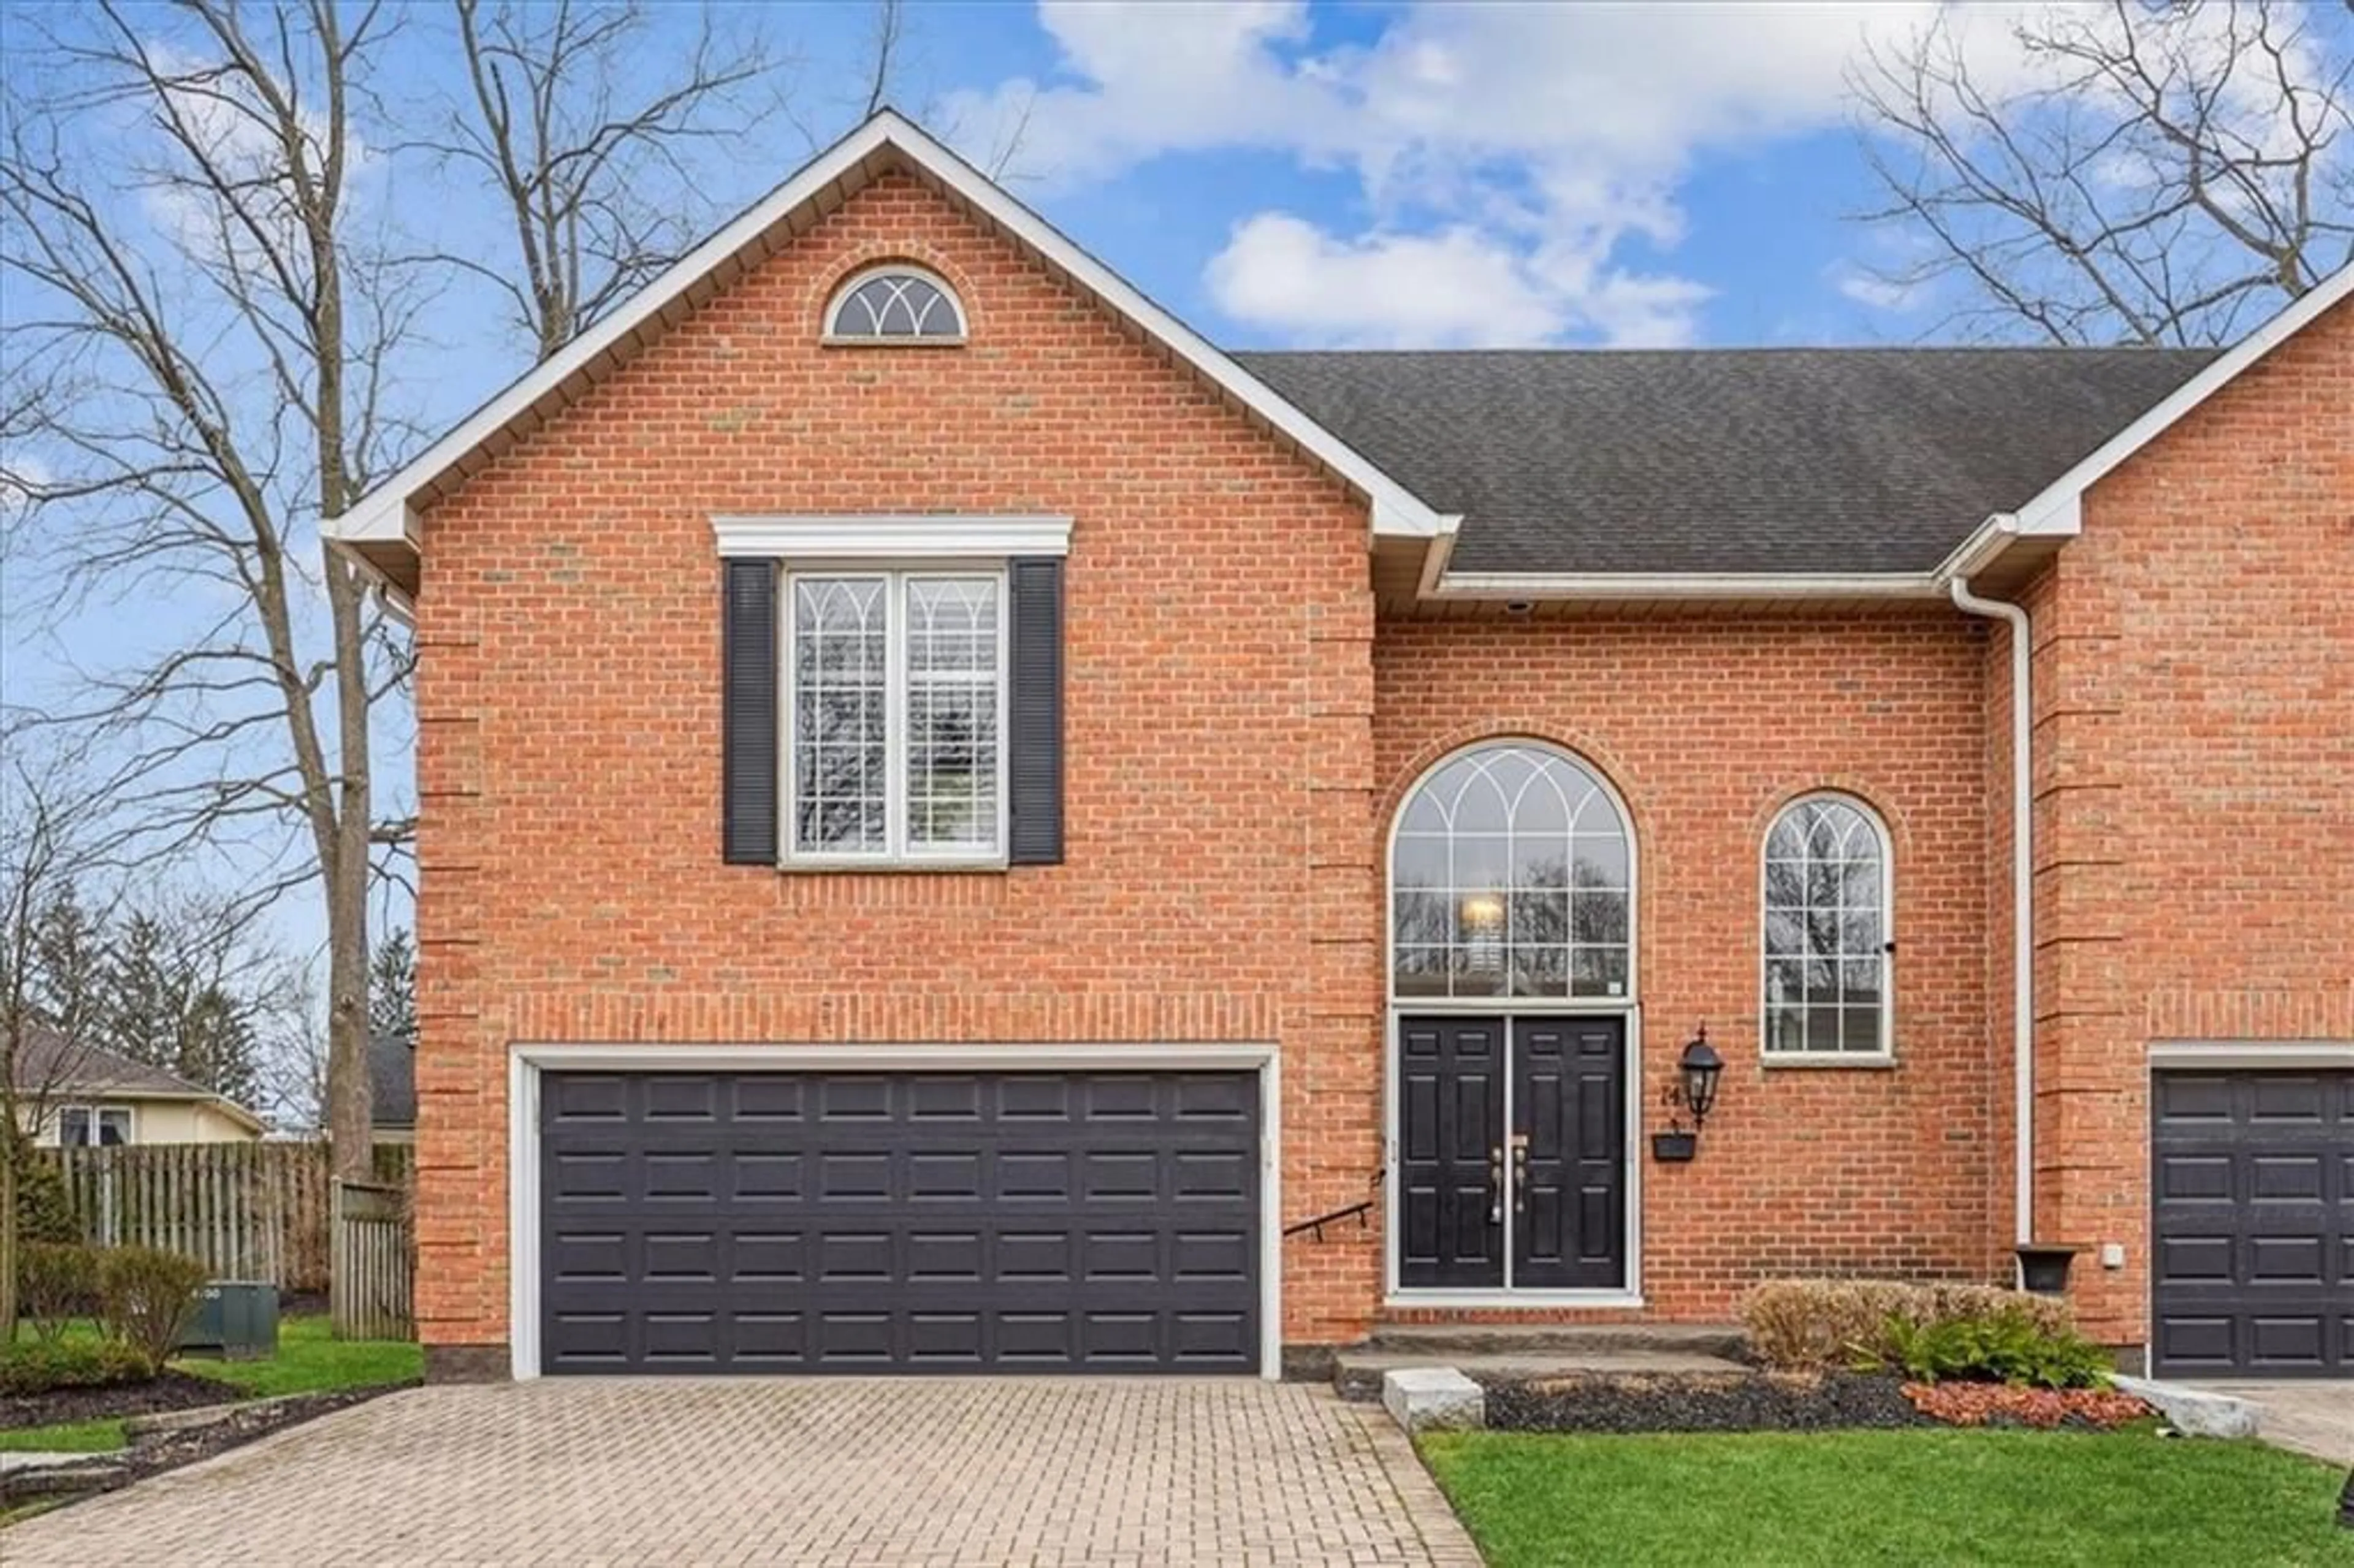 Home with brick exterior material for 4667 Portage Rd #14, Niagara Falls Ontario L2E 6A9